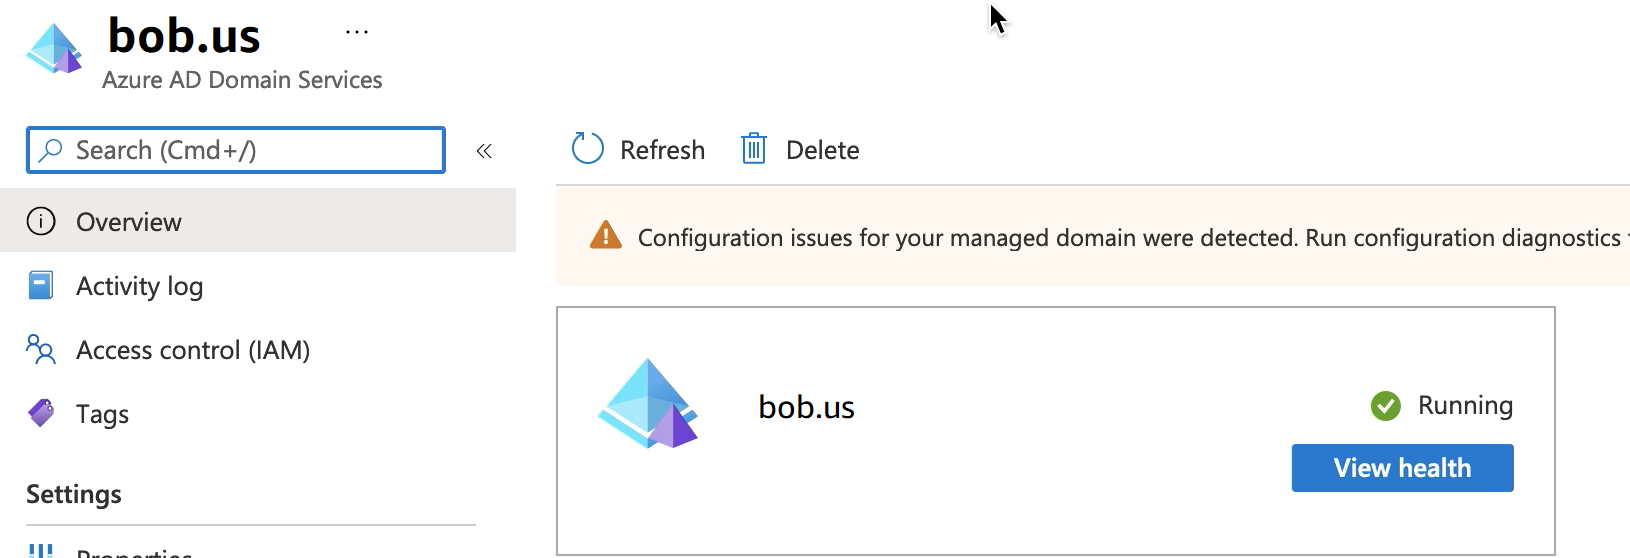 Azure AD 域服务屏幕显示资源组 bob.us 正在运行。